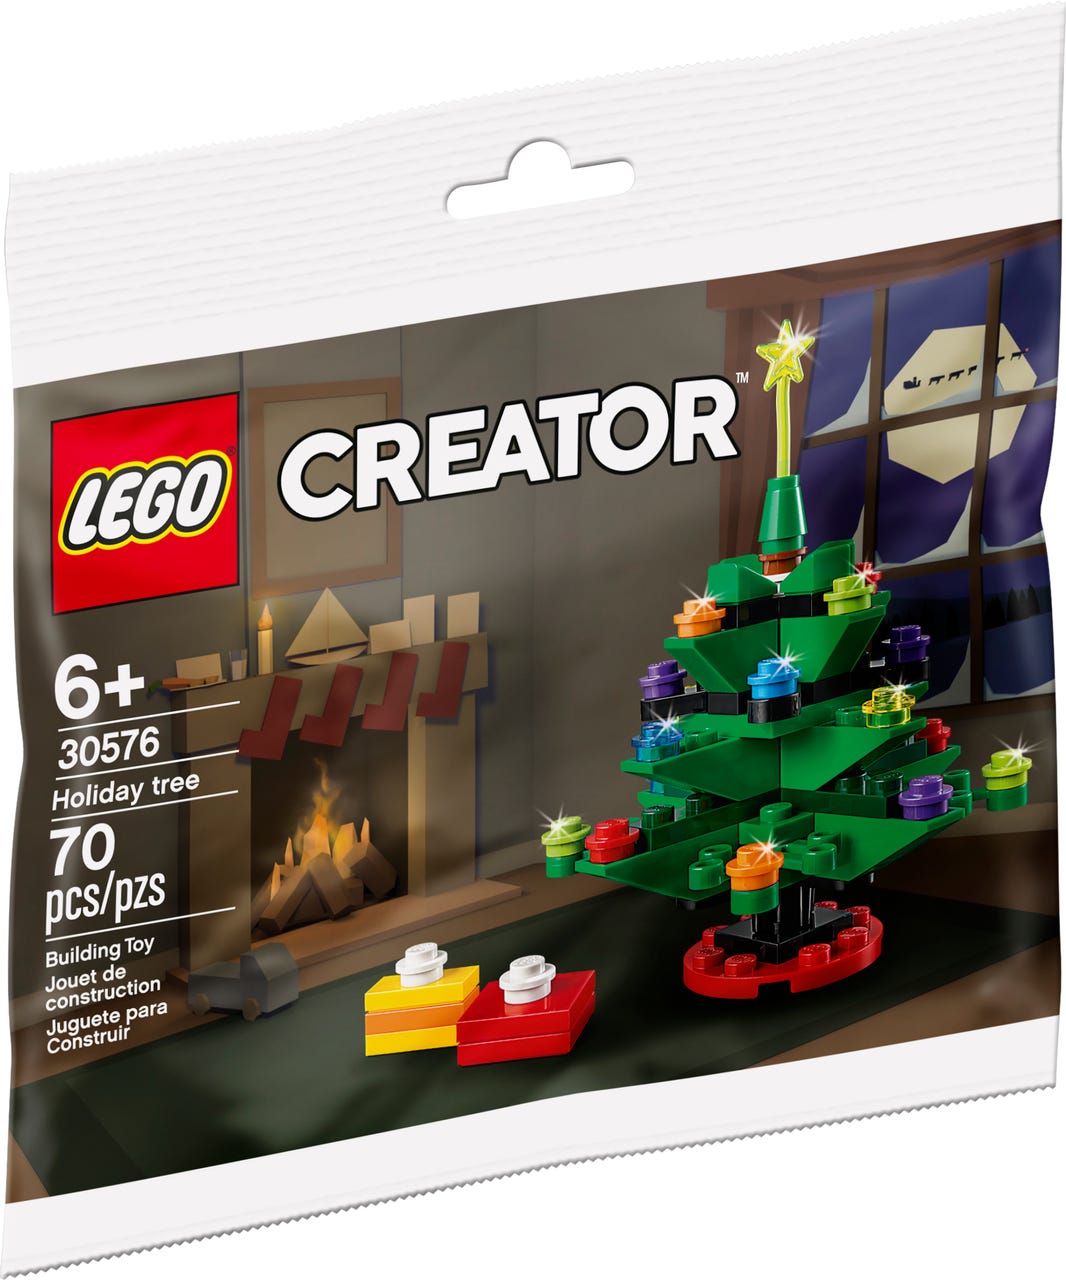 LEGO Creator Christmas Tree 30009